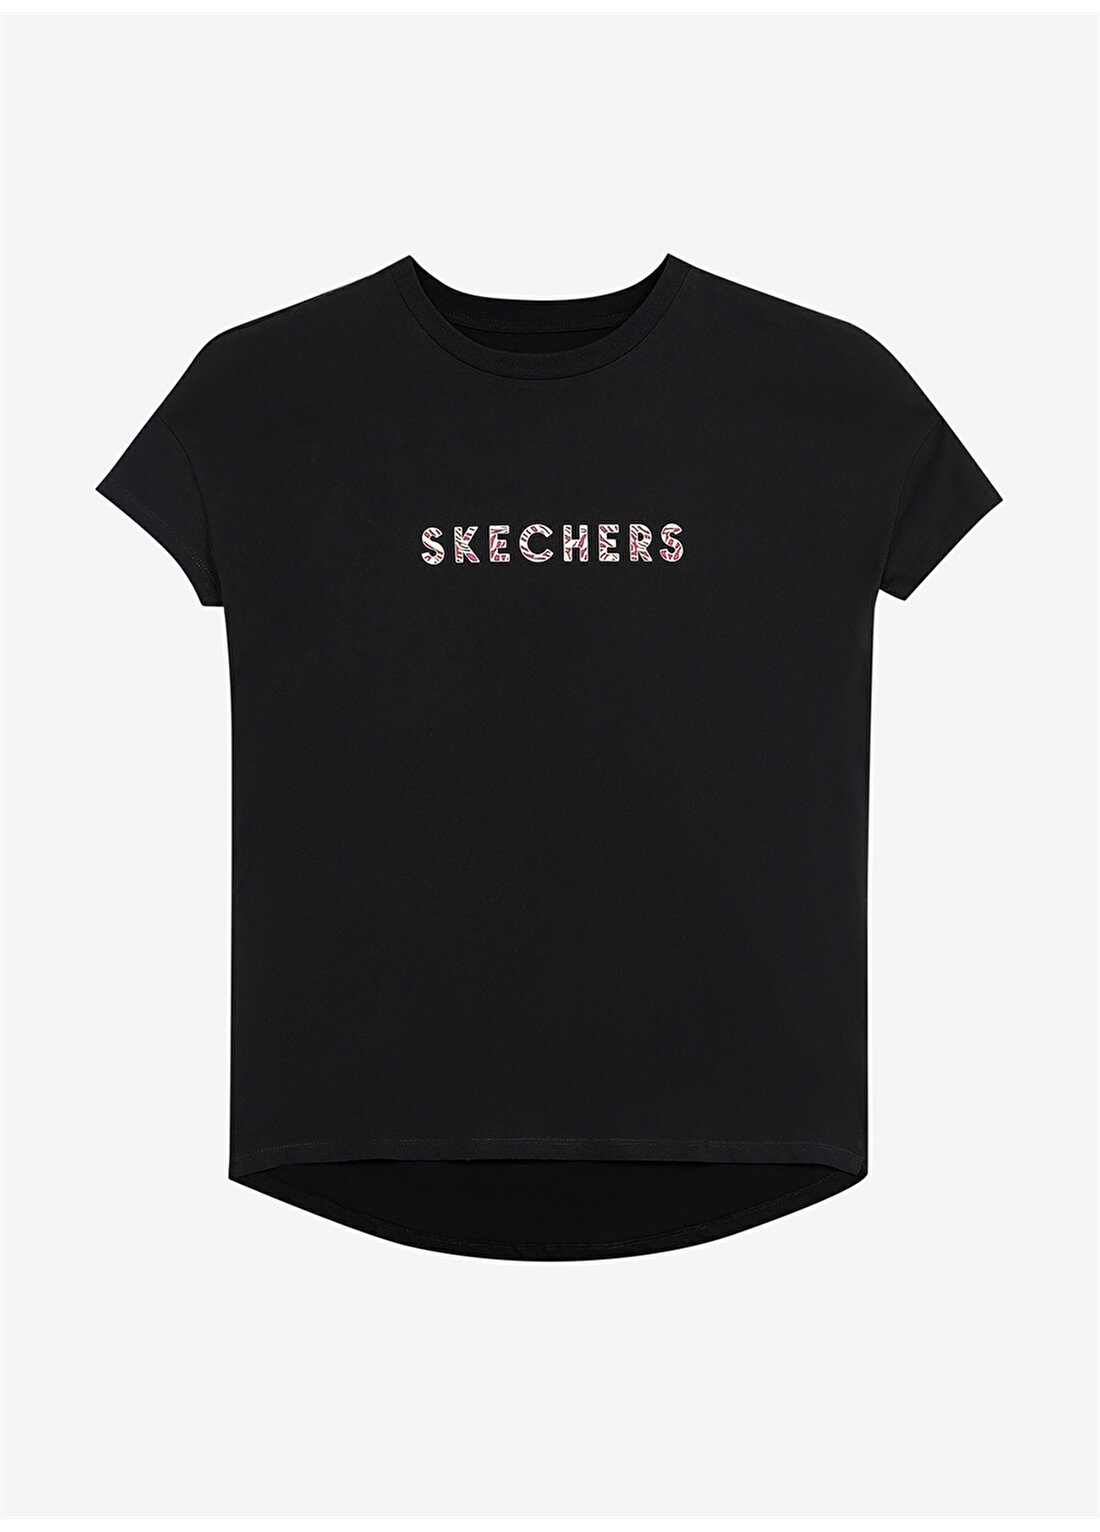 Skechers Yuvarlak Yaka Düz Siyah Kadın T-Shirt S231299-001 W Graphic Tee Crew Neck